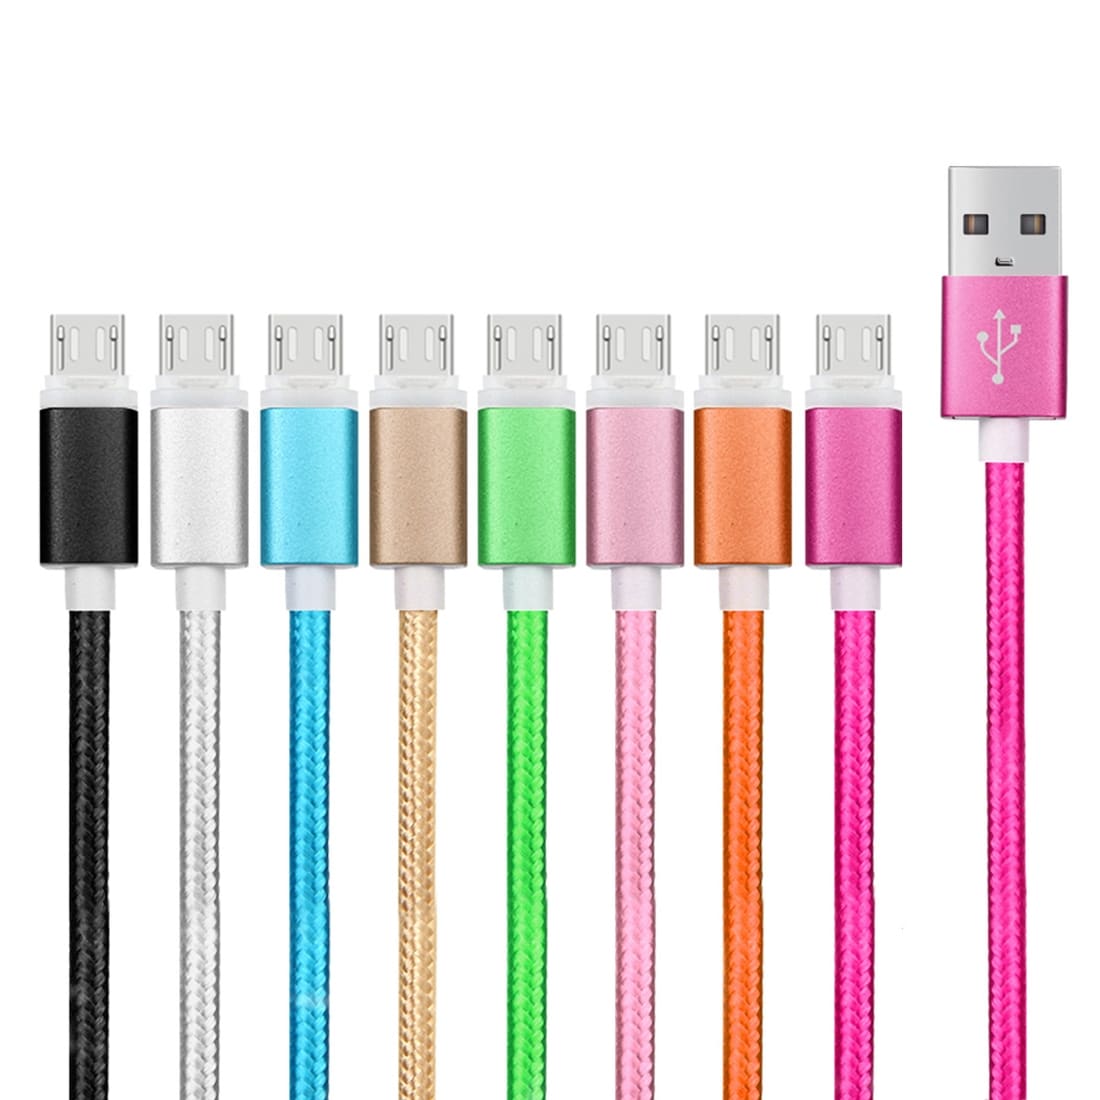 Stryktålig tygbeklädd Usbkabel Micro USB med metallhuvud - Storpack 8st i olika färger